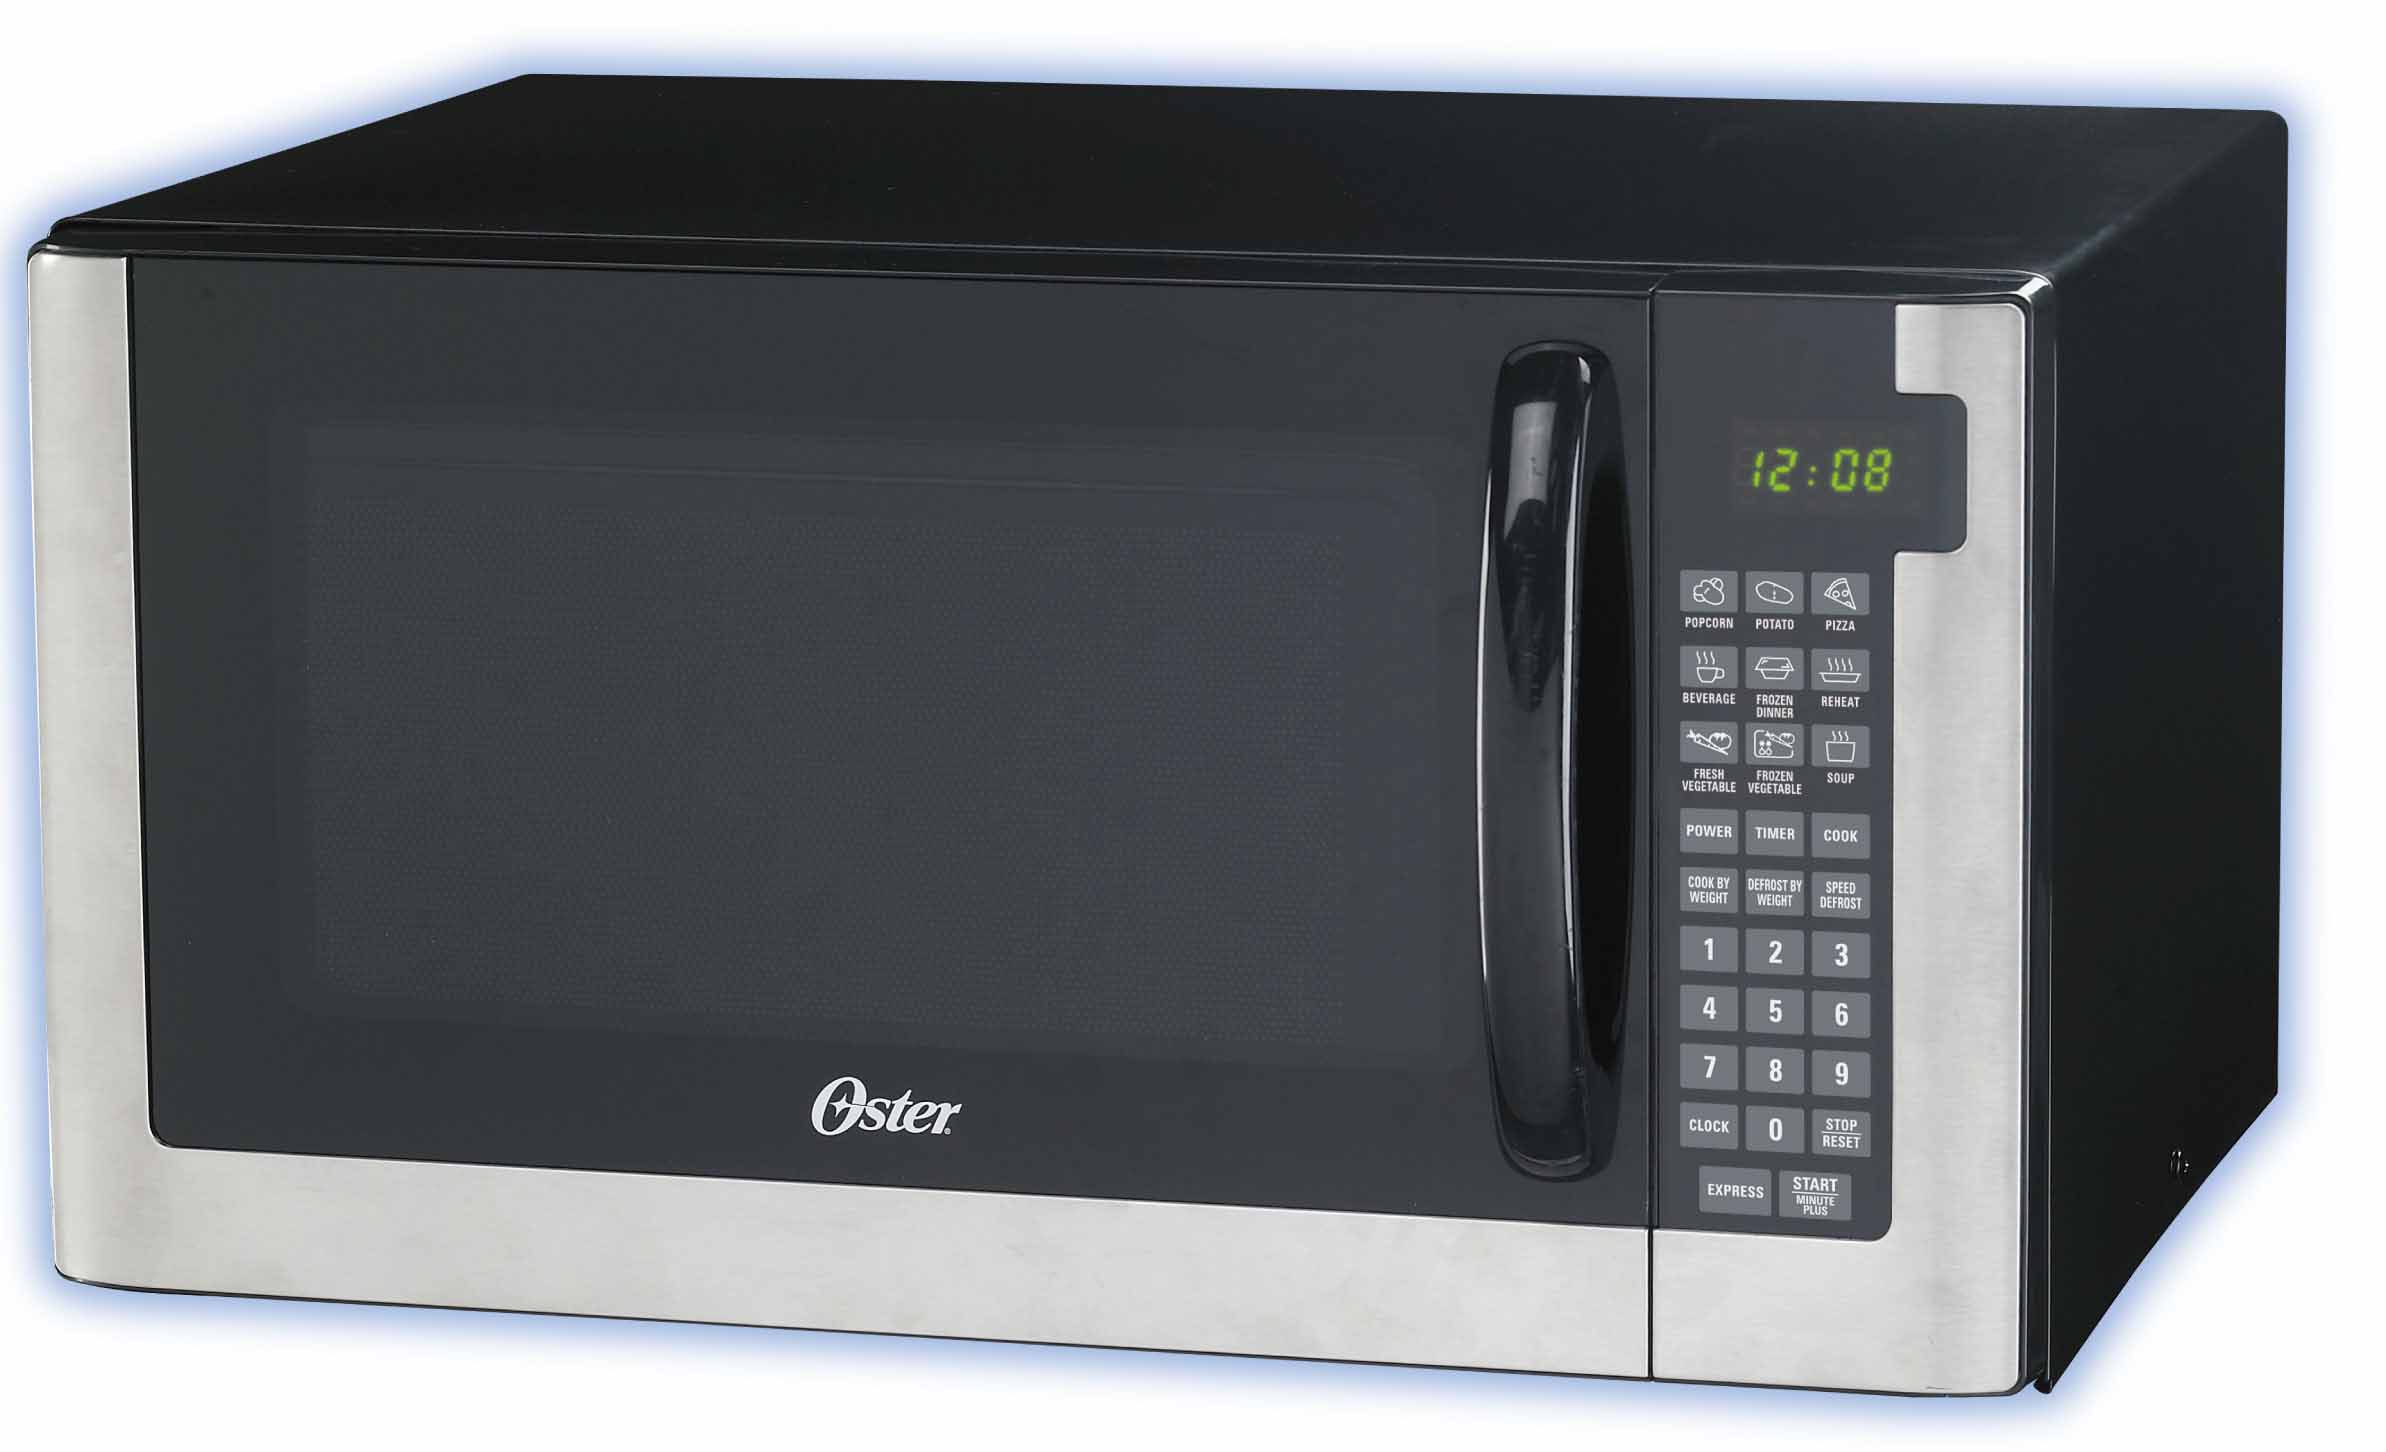 25.4 Quarts 1200W Electric Home Mini Desktop Microwave Oven